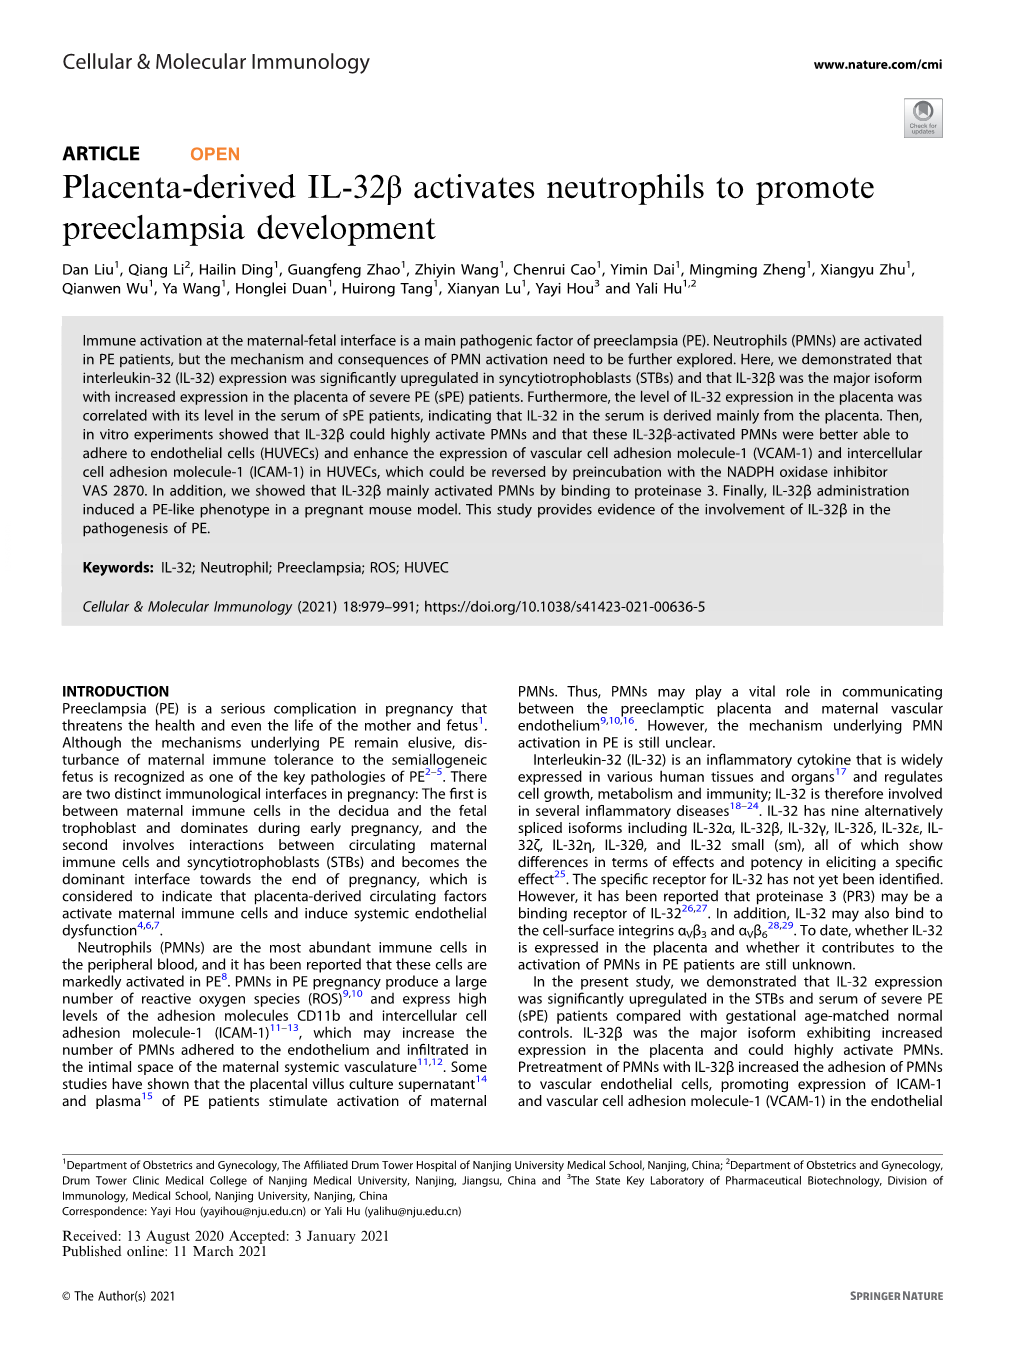 Placenta-Derived IL-32Î² Activates Neutrophils to Promote